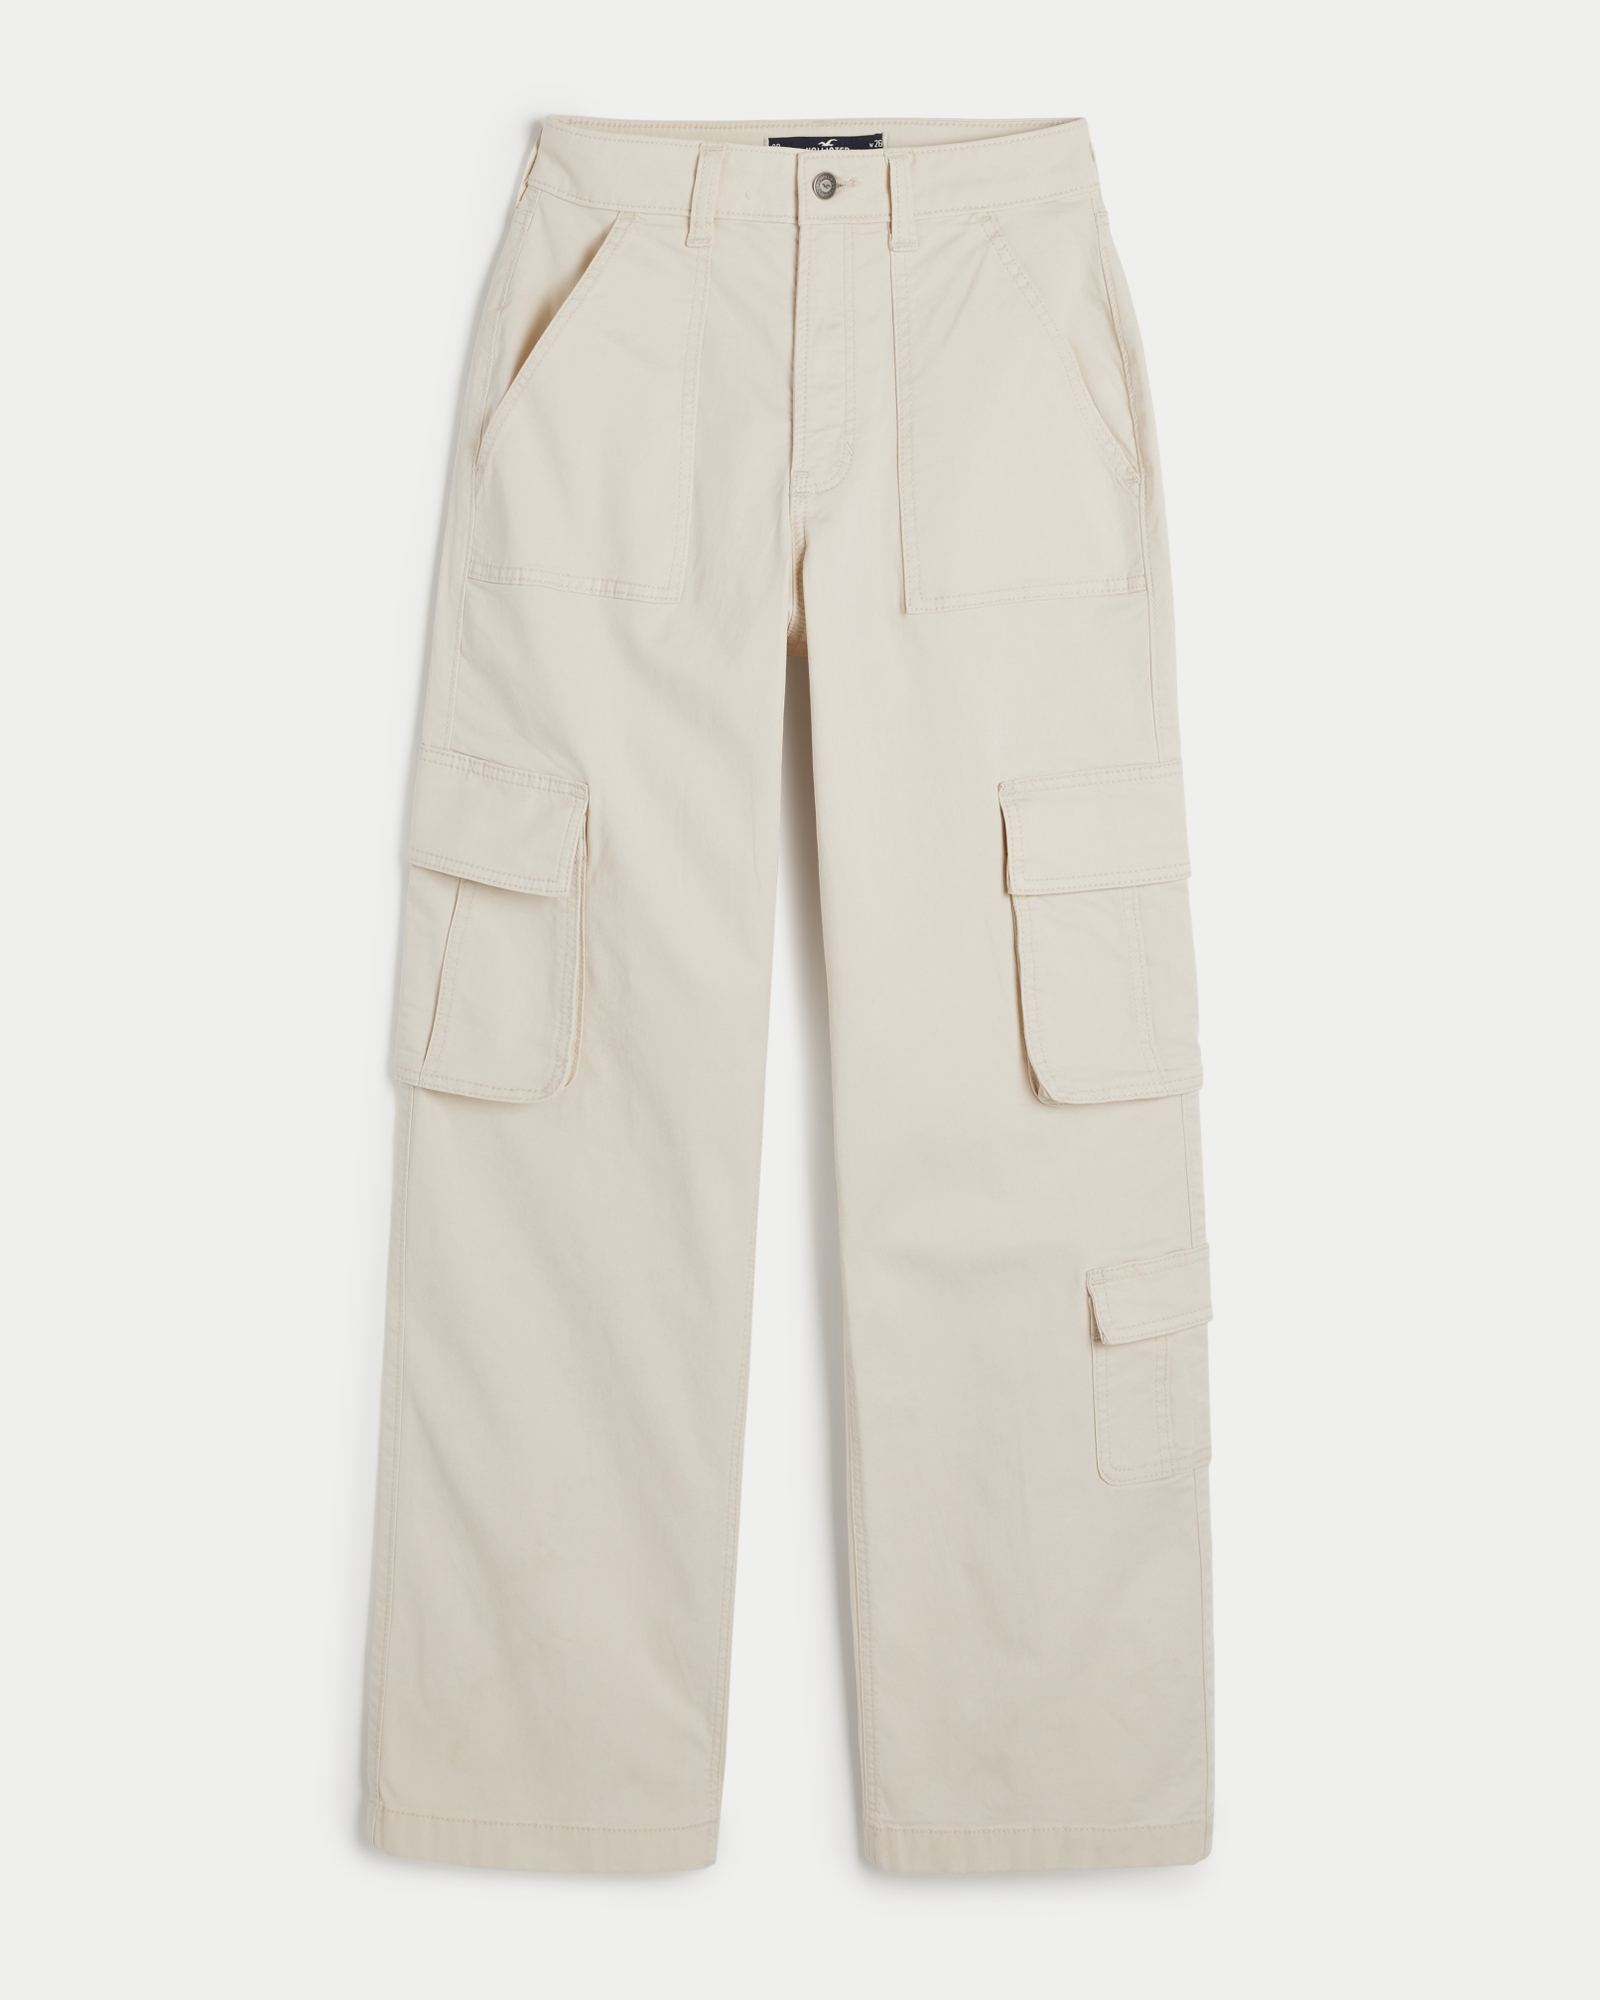 beige american eagle cargo pants, size 6, true to